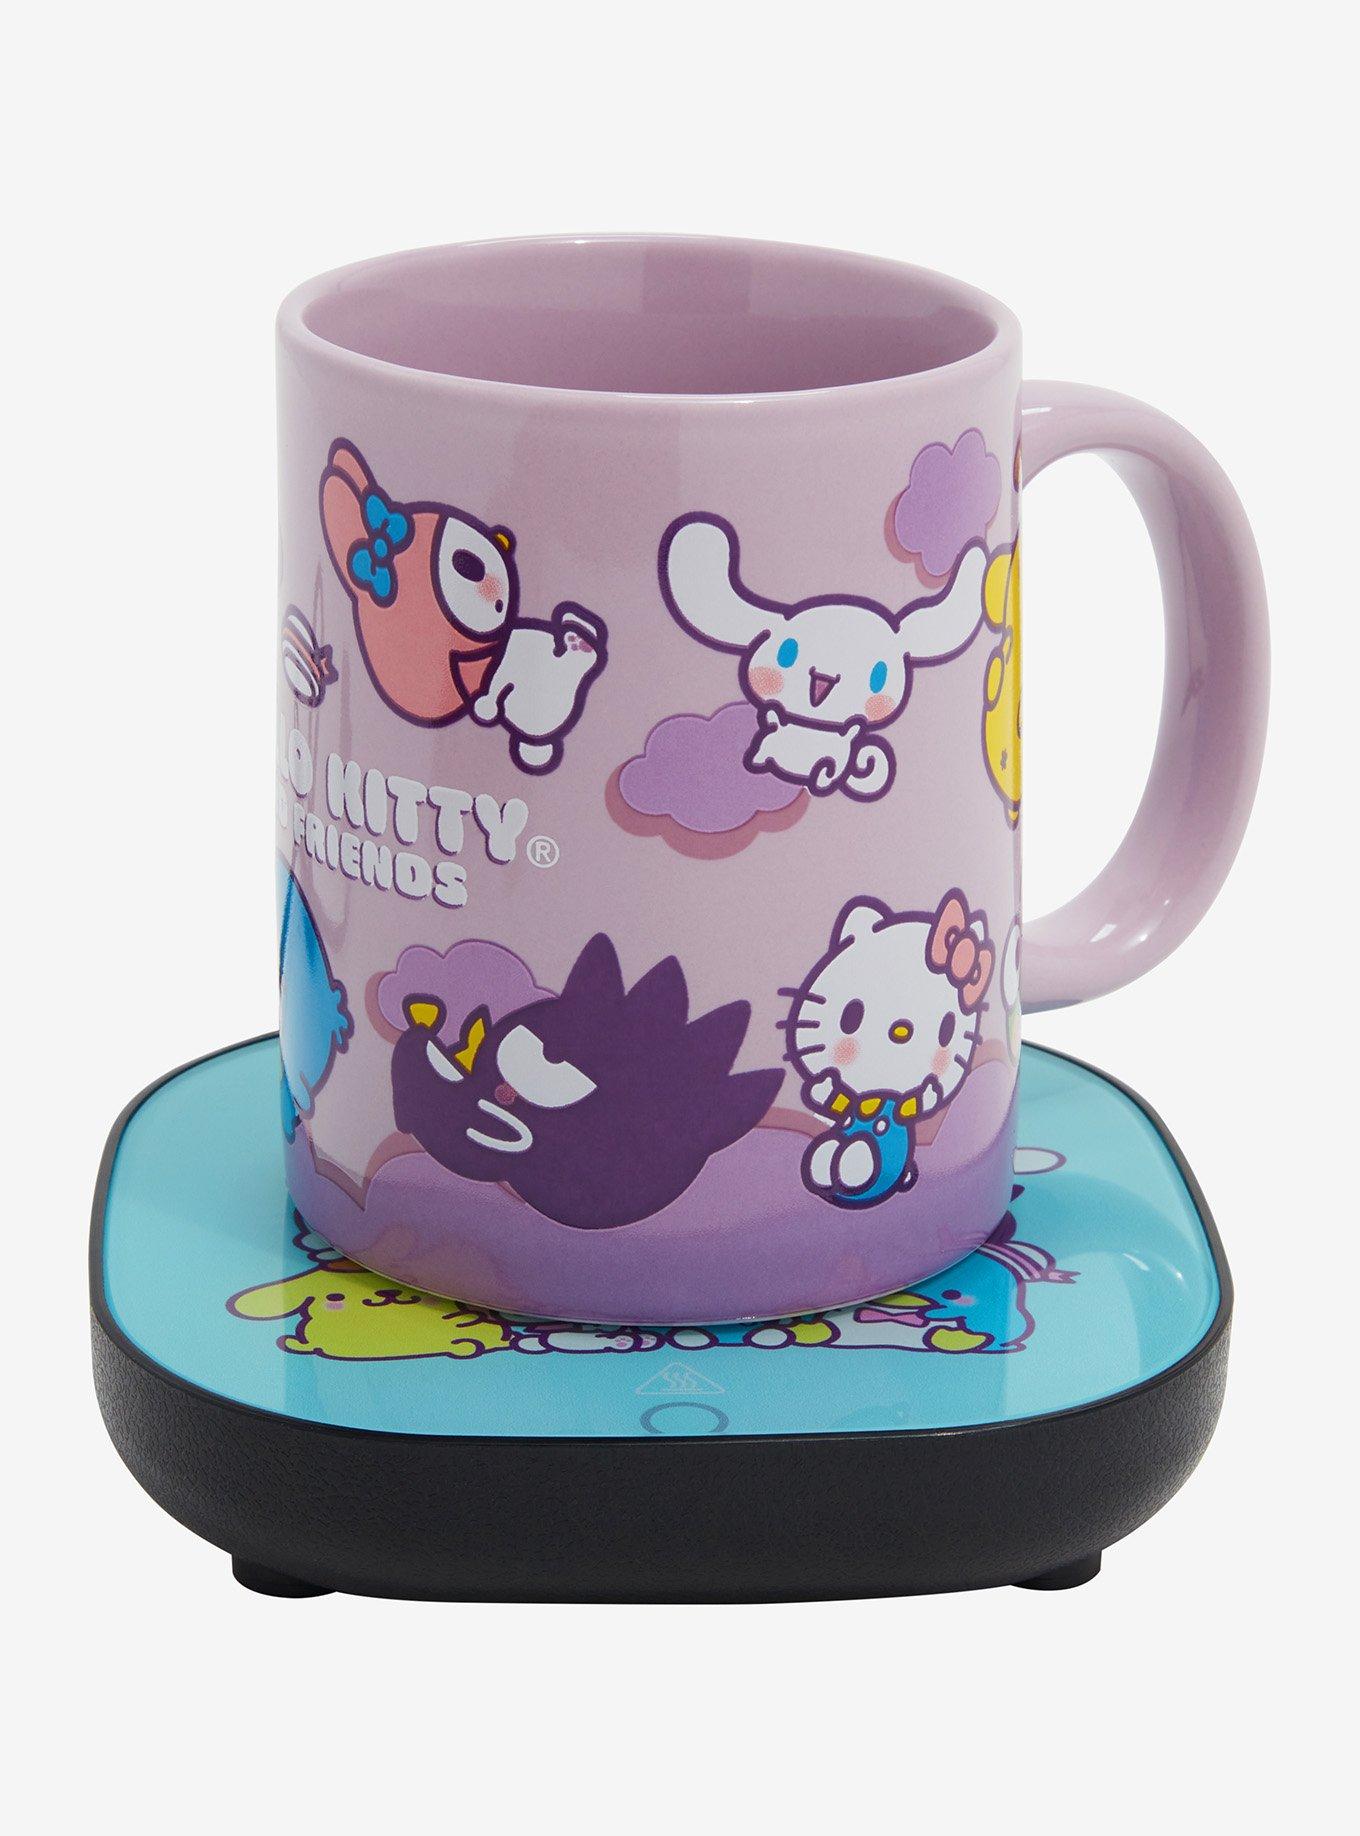 Hello Kitty and Friends My Melody Mug Warmer with Mug ..